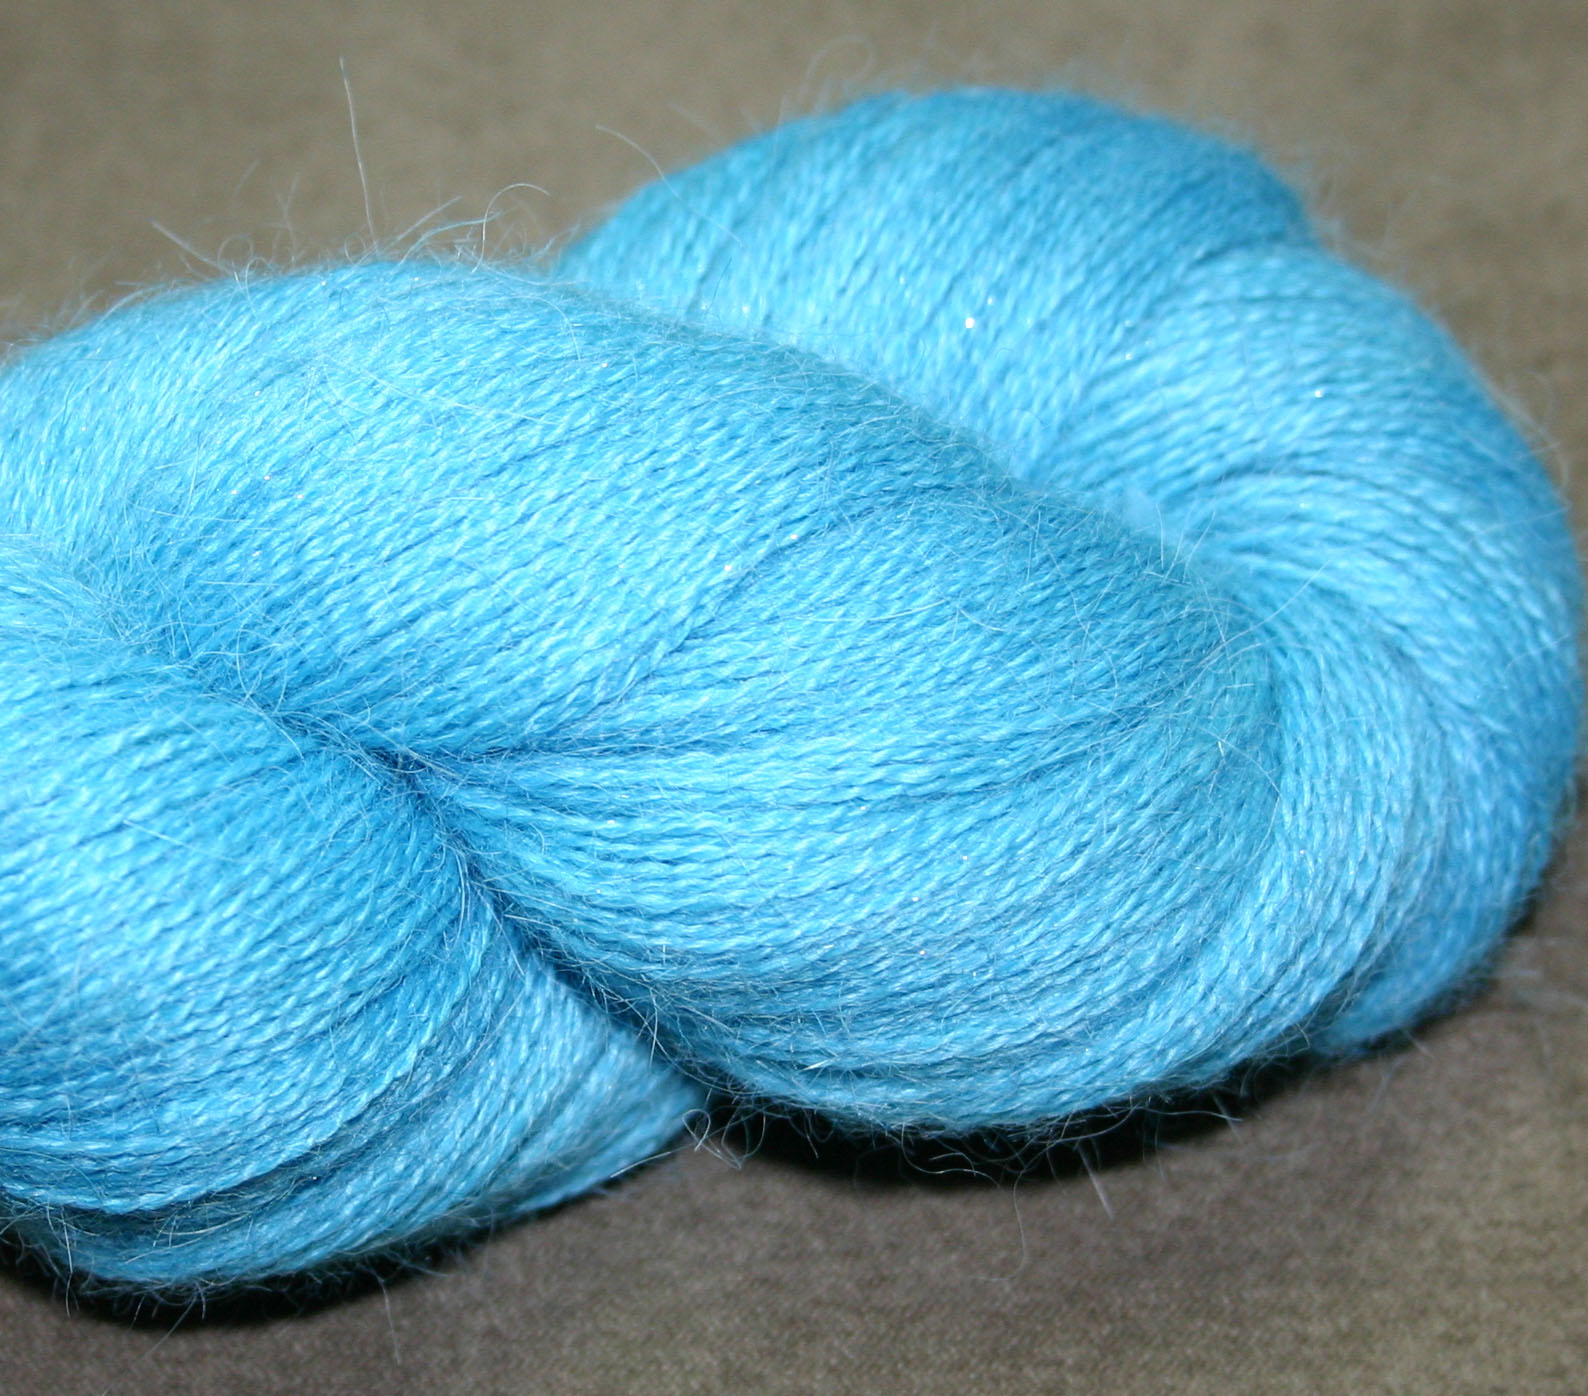 Ivy Brambles Silver Cloud Suri Alpaca Glitter Lace Yarn - 107 Bluebell Woods